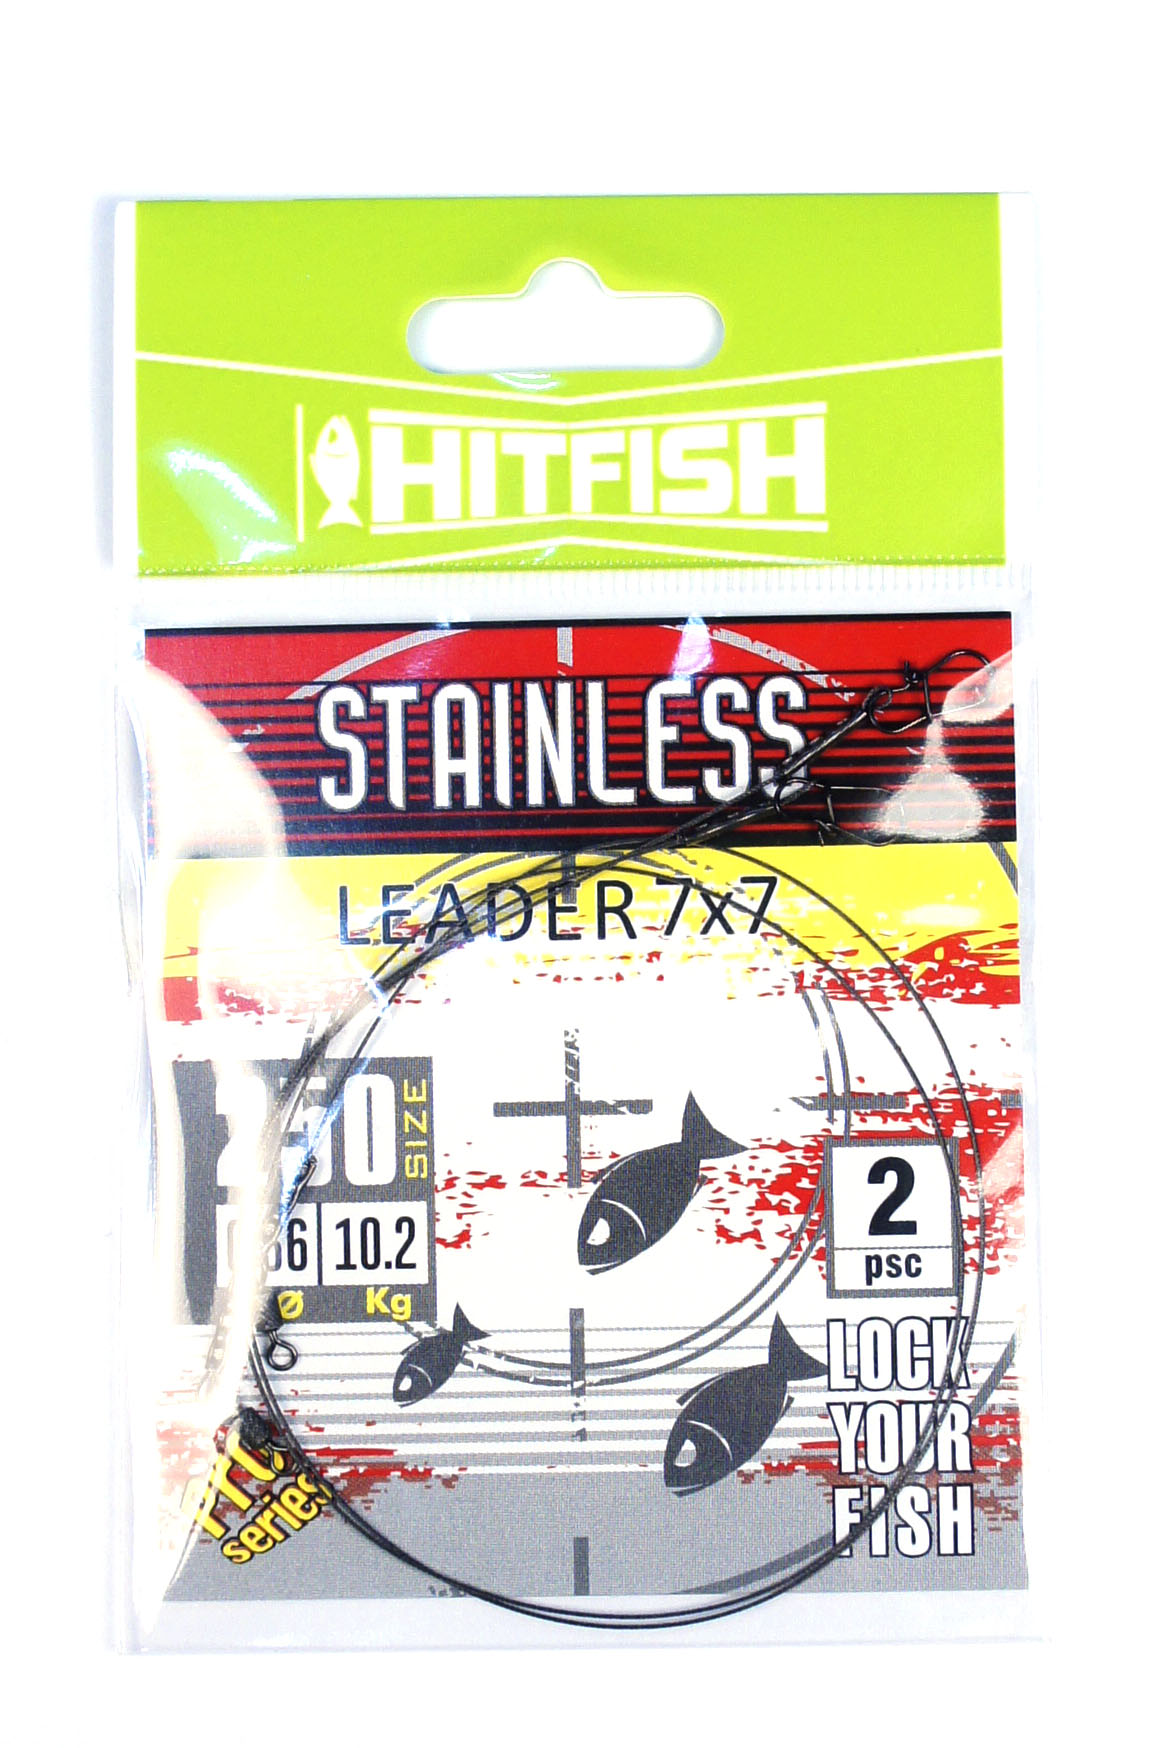 картинка Поводок HITFISH Stainless Leader 7x7 (Japanes material) от производителя Hitfish